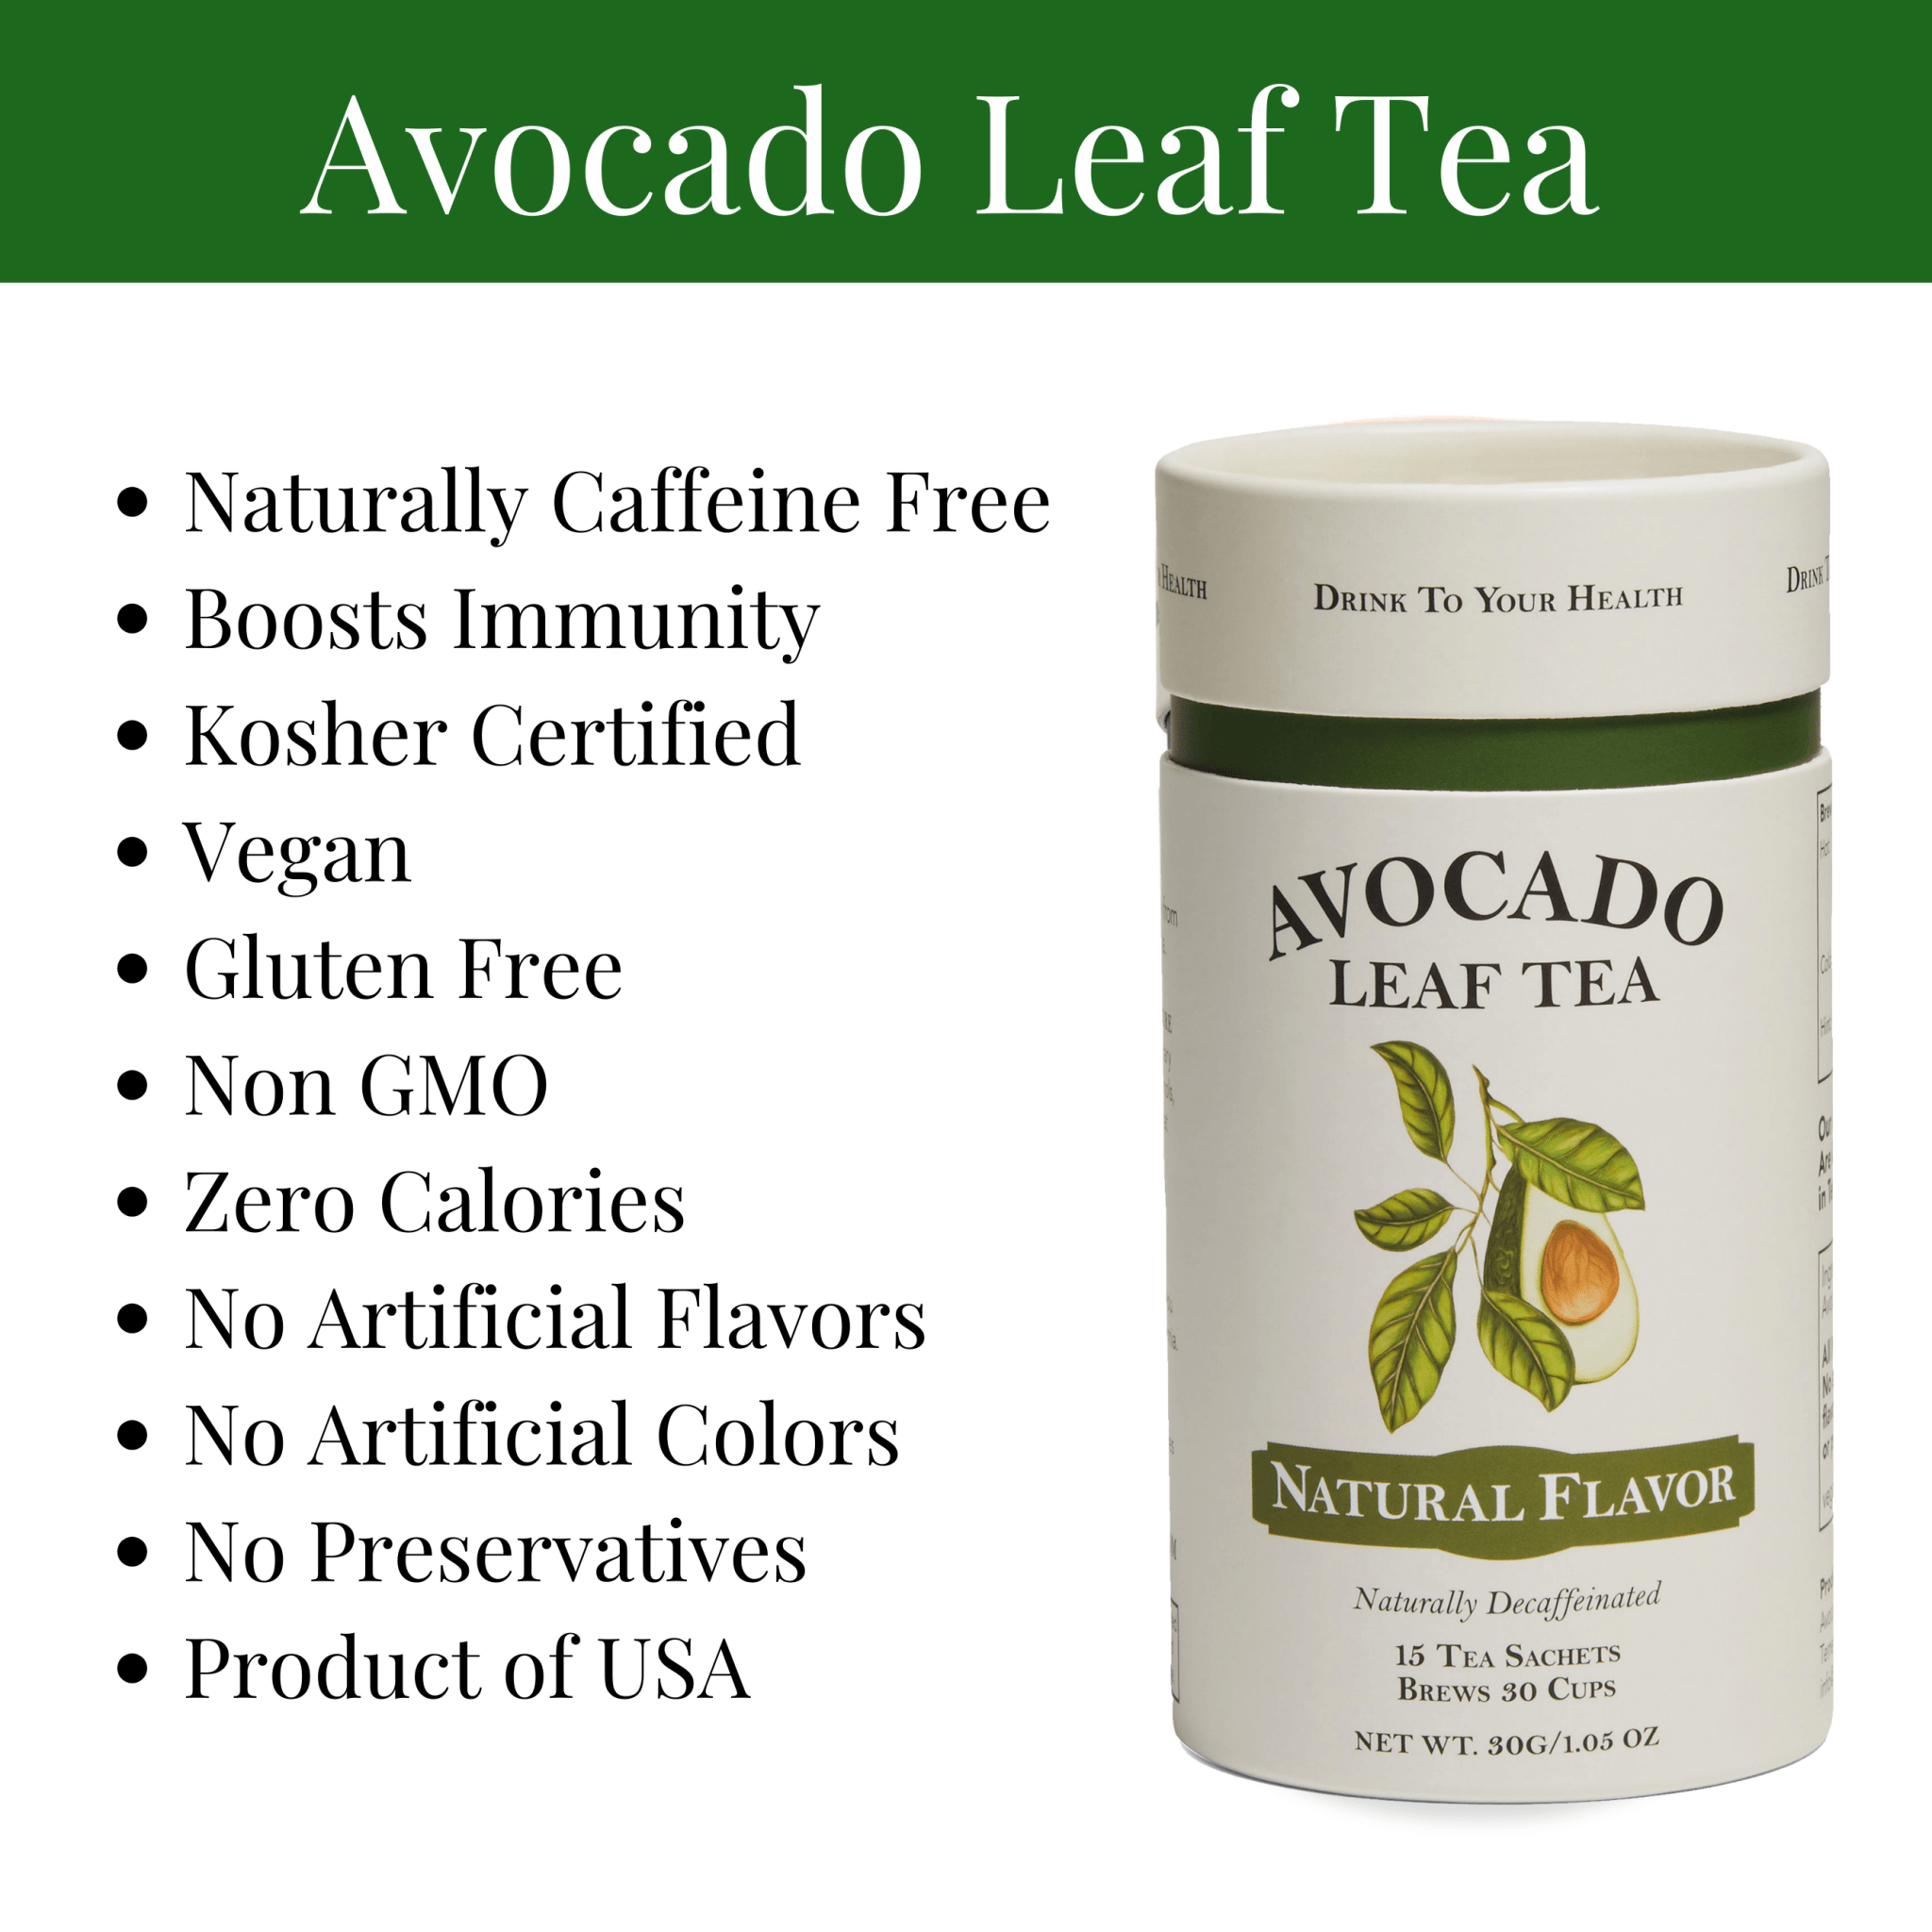 Chamomile tea, organic tea, health benefits, herbal tea, antioxidant rich, wellness beverage, relaxing tea,  buy avocado tea